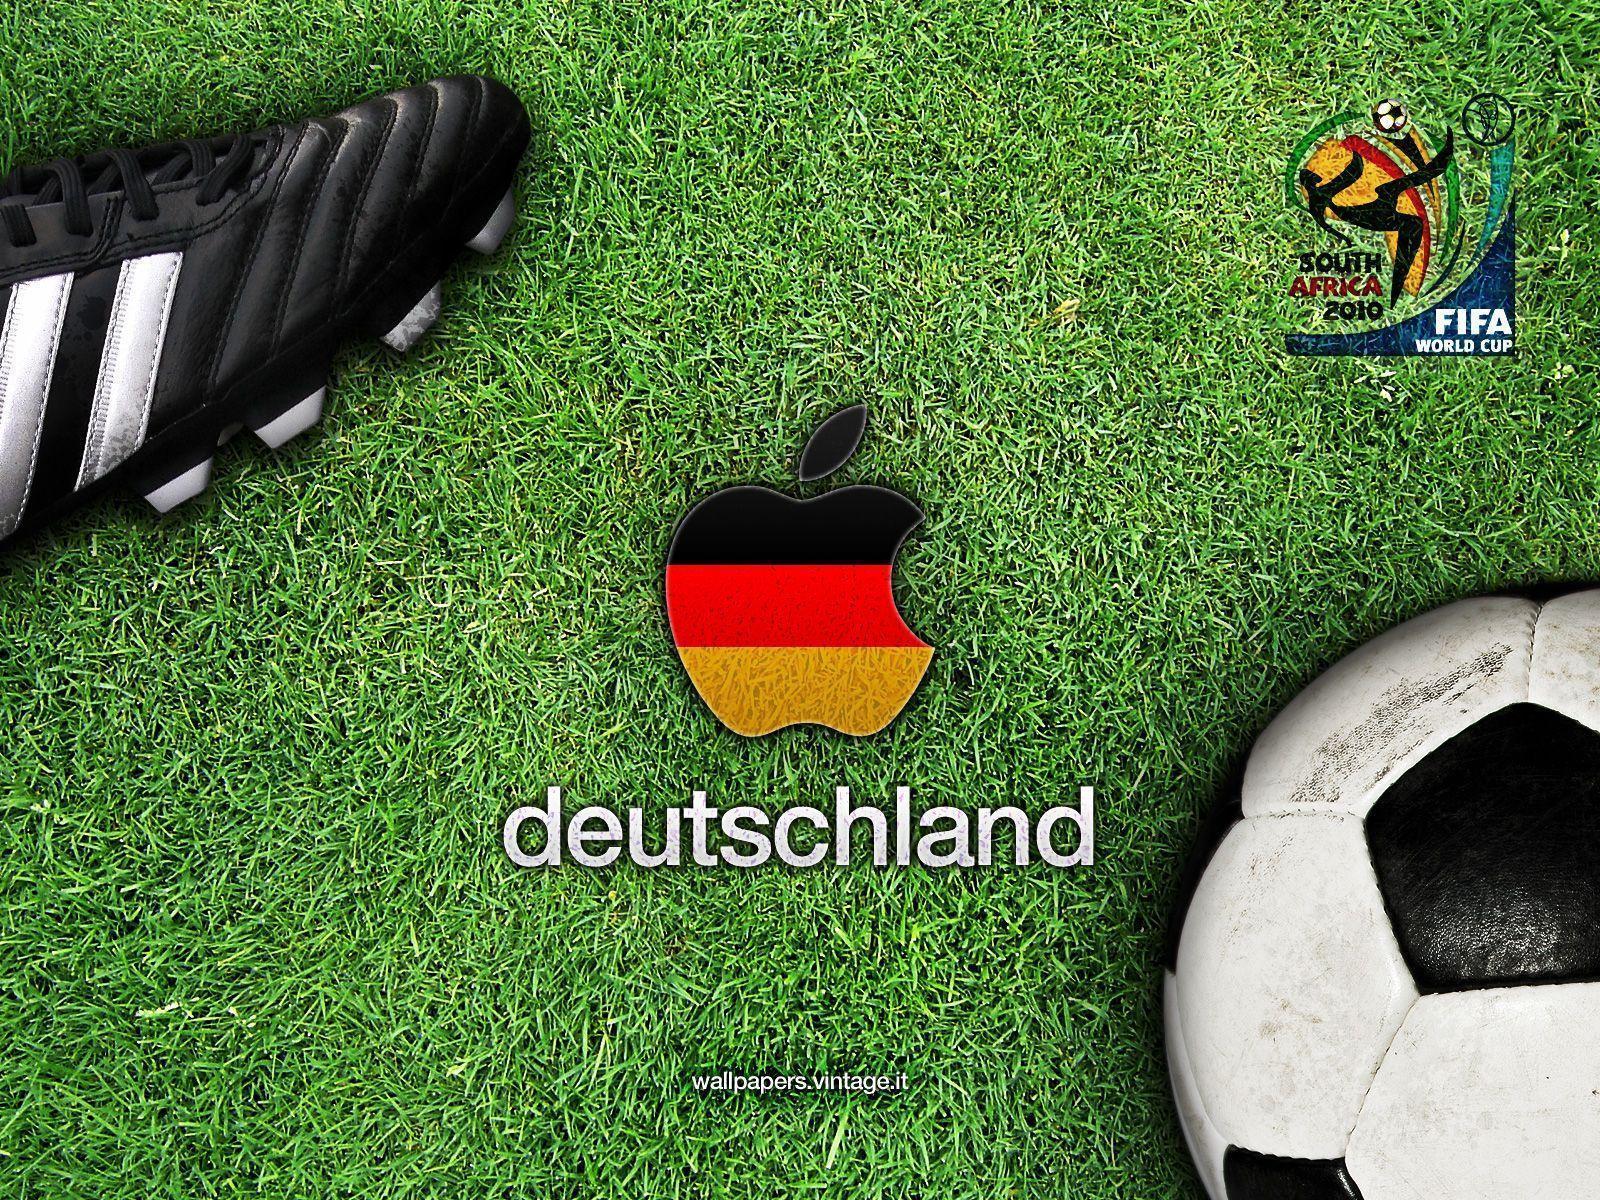 FIFA Copa del Mundo de Alemania fondos de pantalla. FIFA Copa del